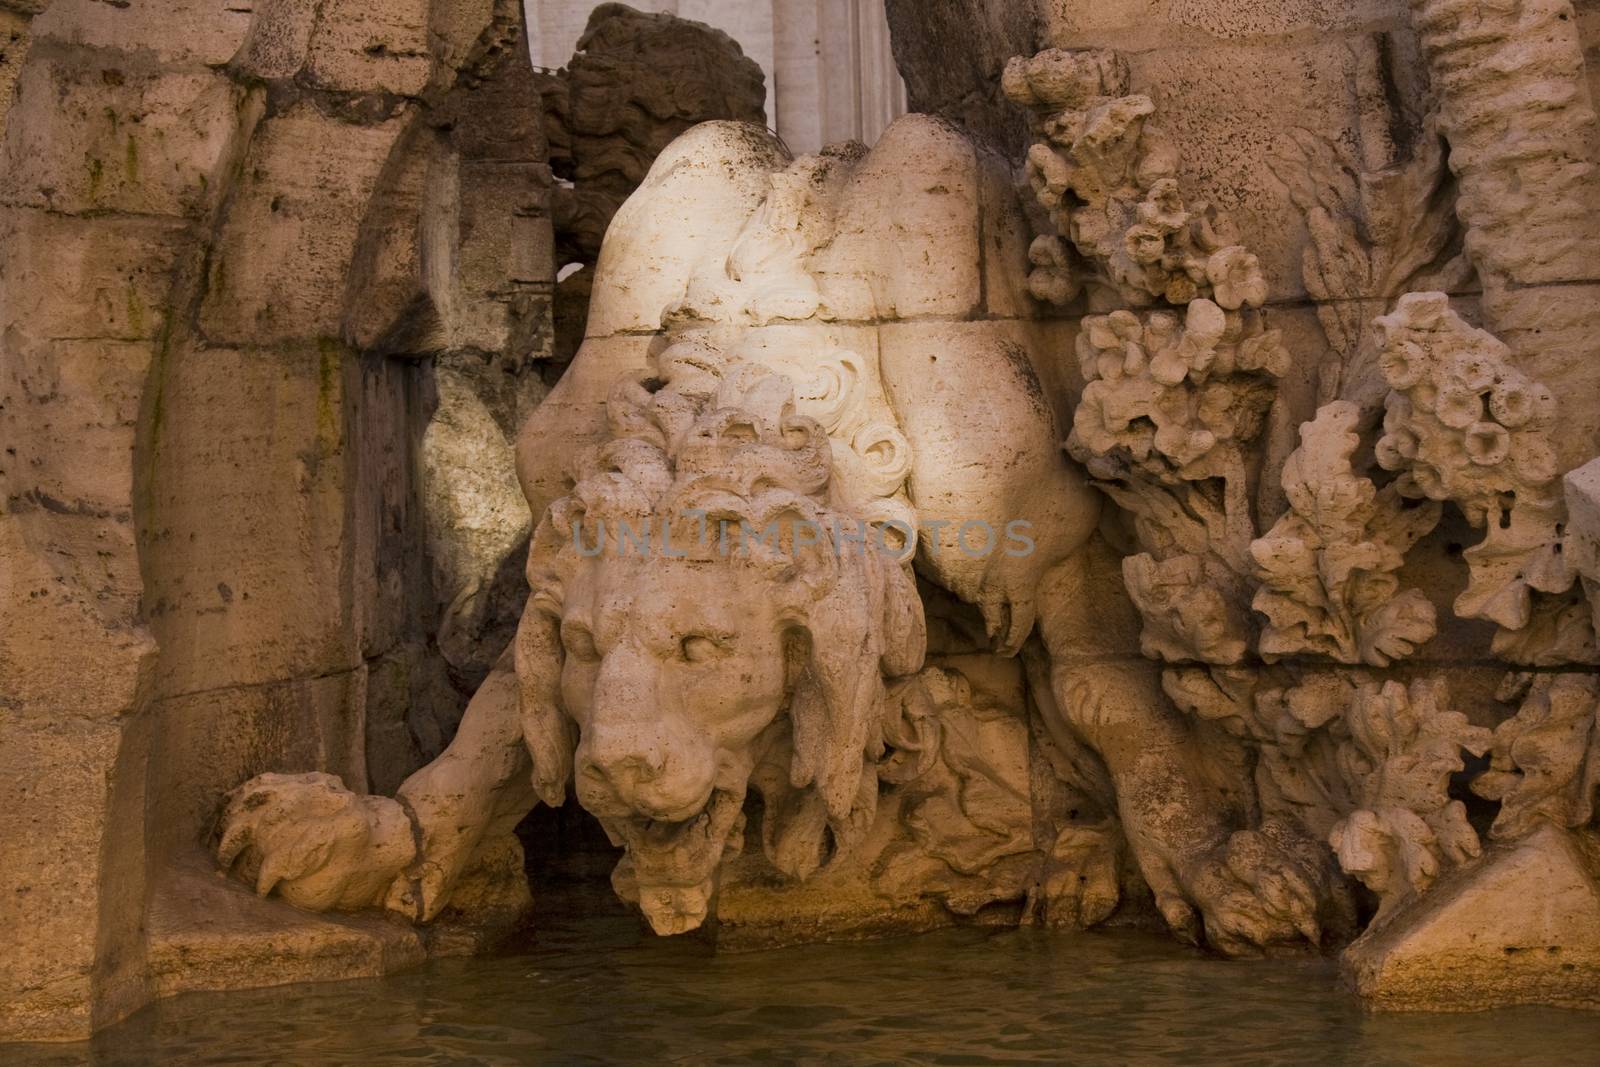 Lion statue on Piazza Navona in Rome by fotoecho